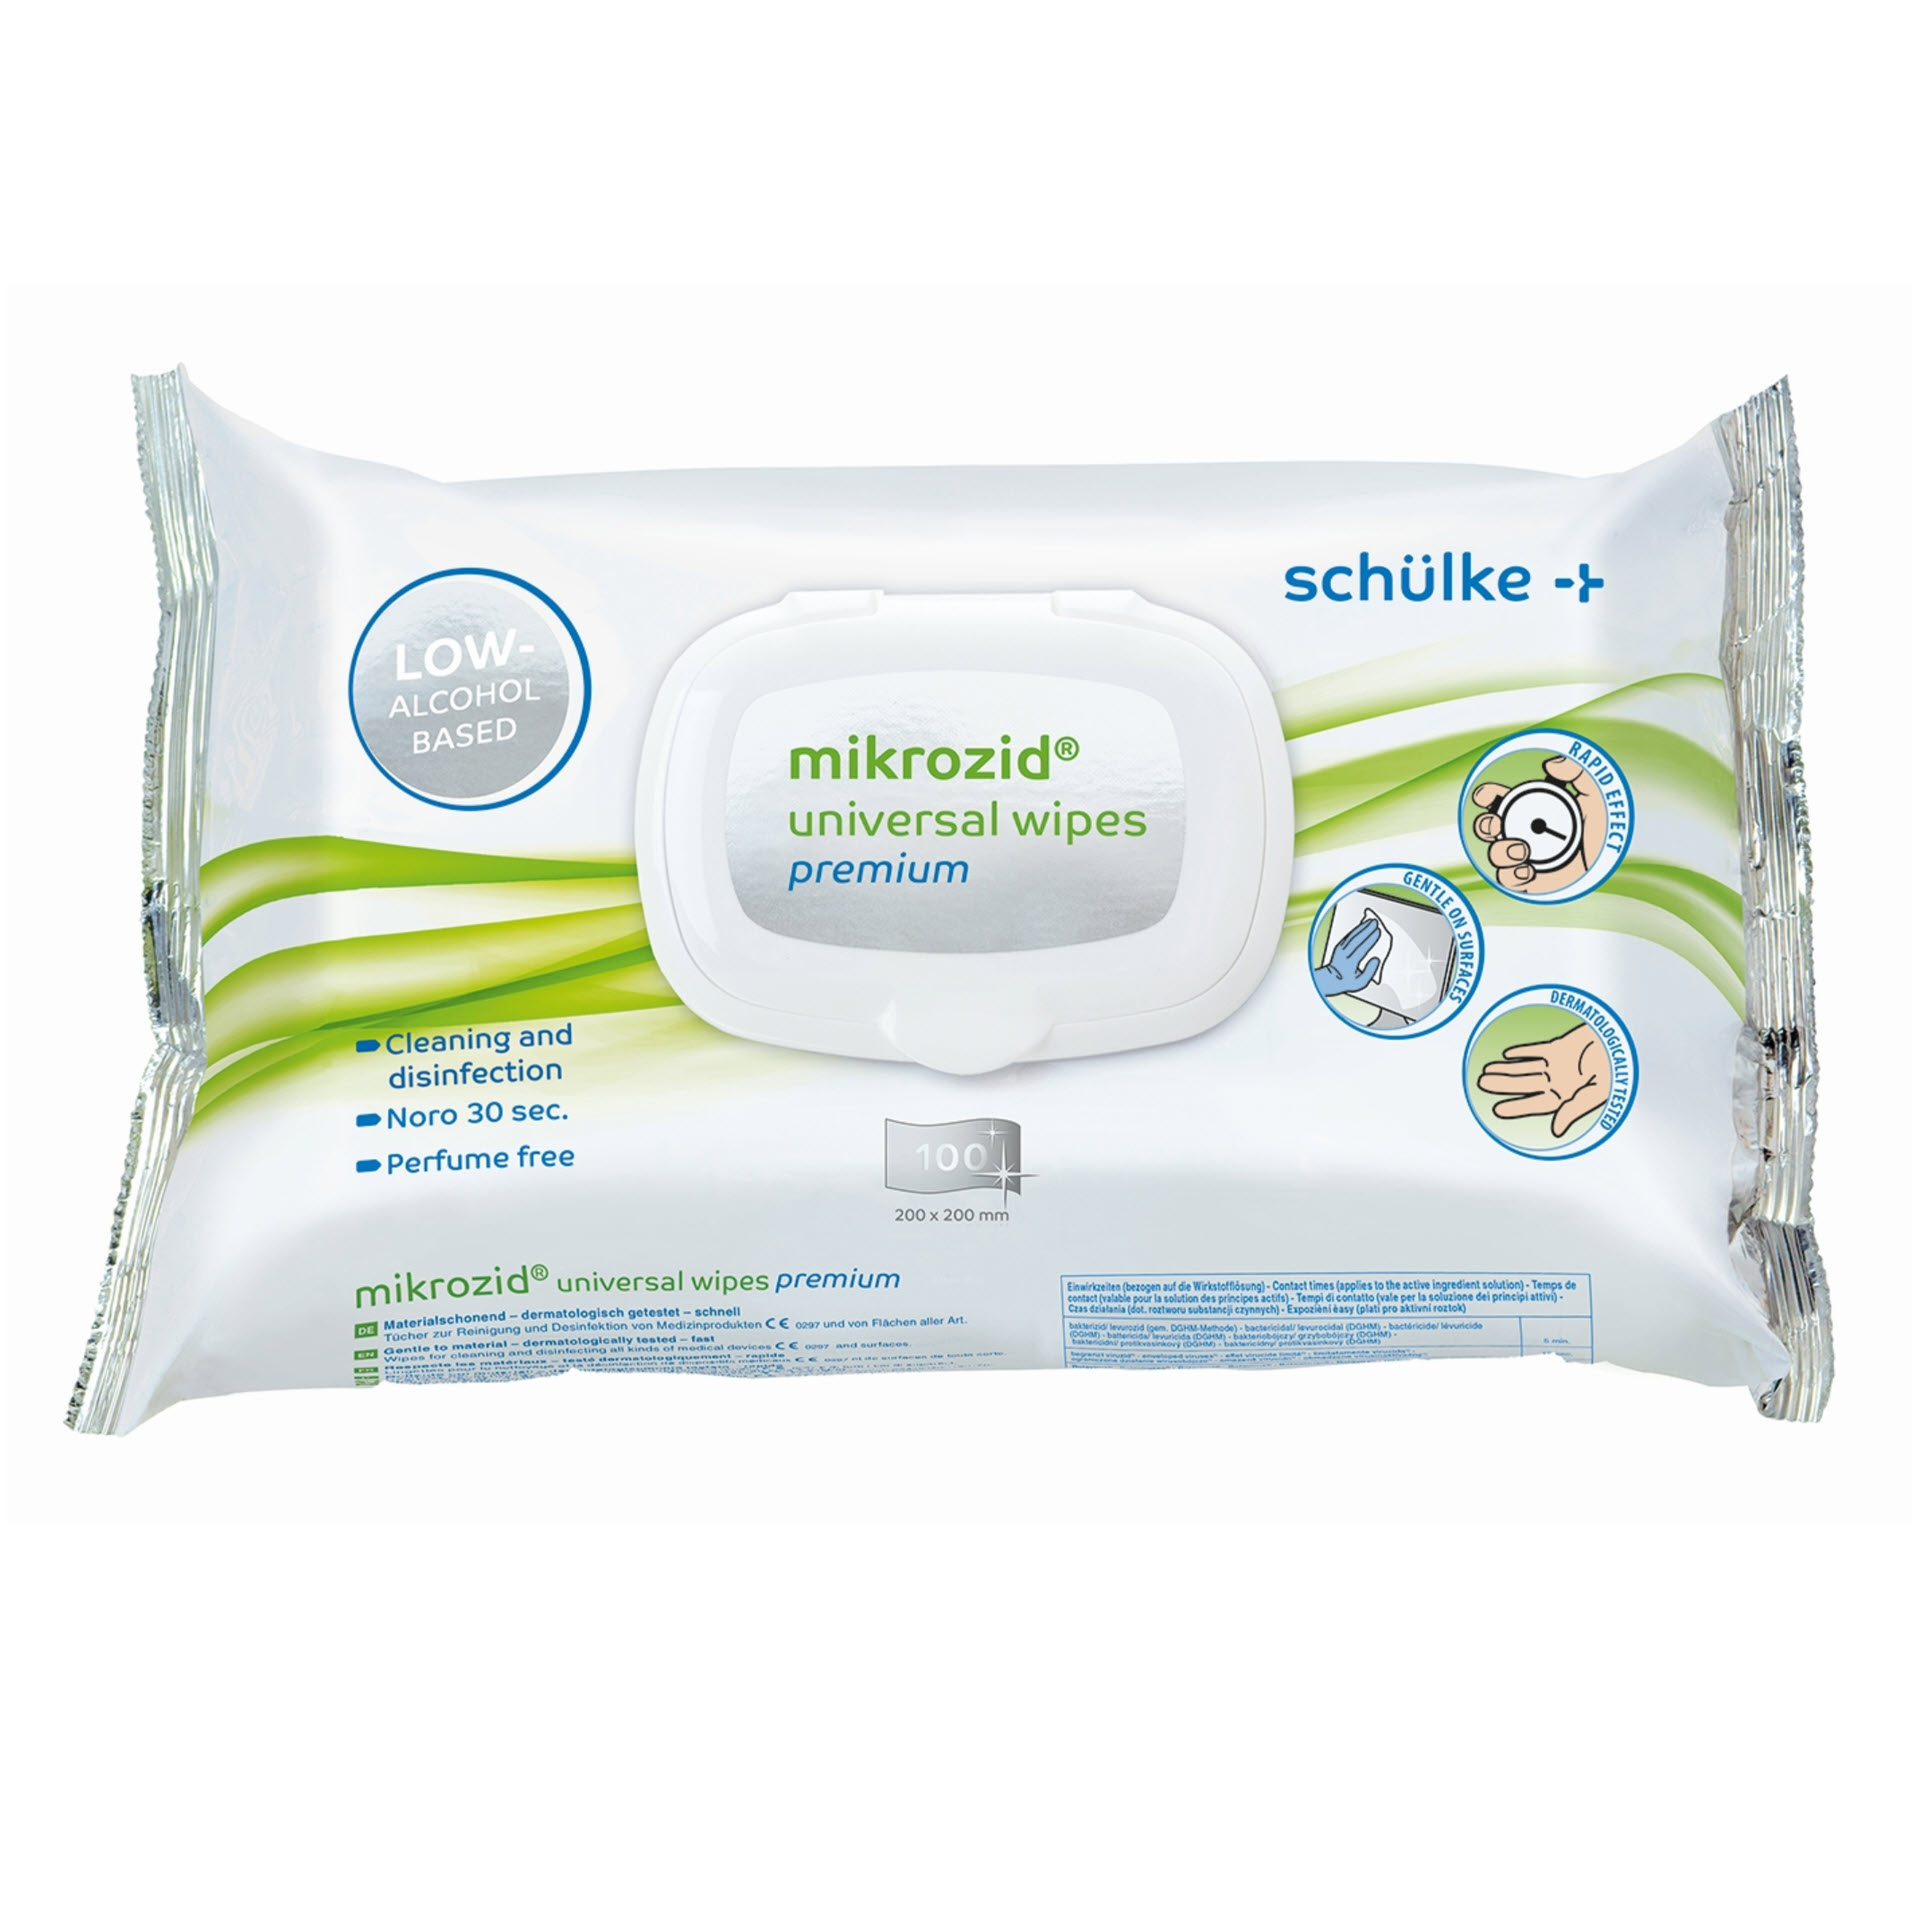 schülke mikrozid® universal wipes premium - Softpack mit 100 Tüchern